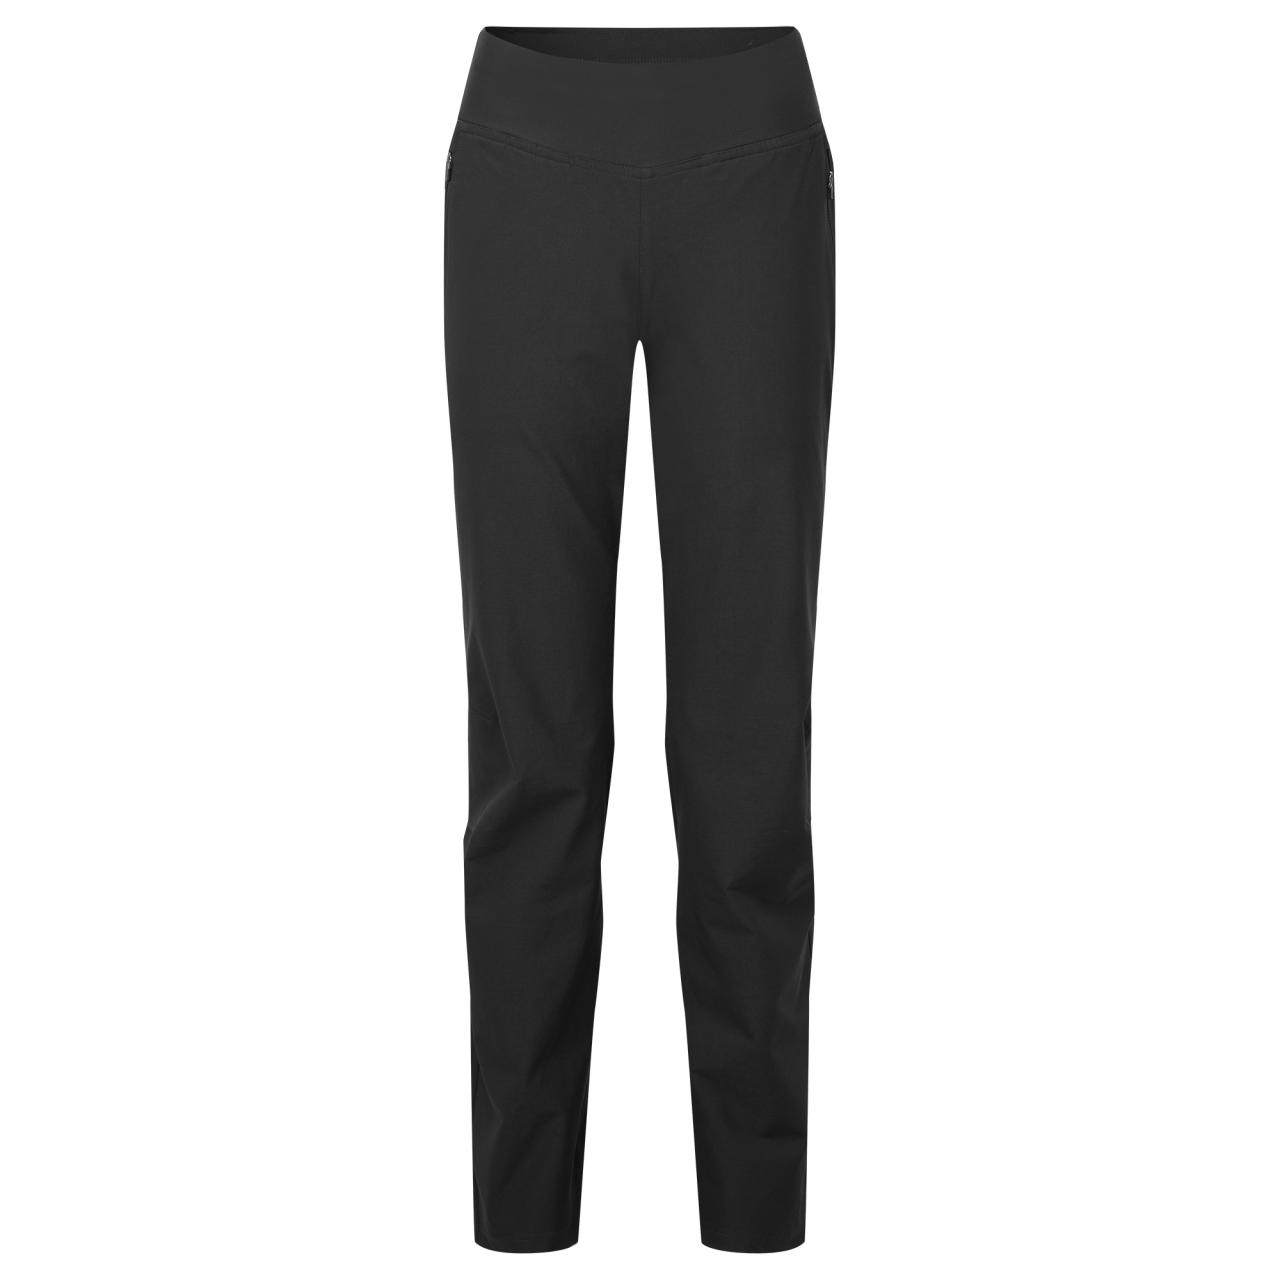 FEM TUCANA PANTS REG LEG-BLACK-UK6/XXS dámské kalhoty černé